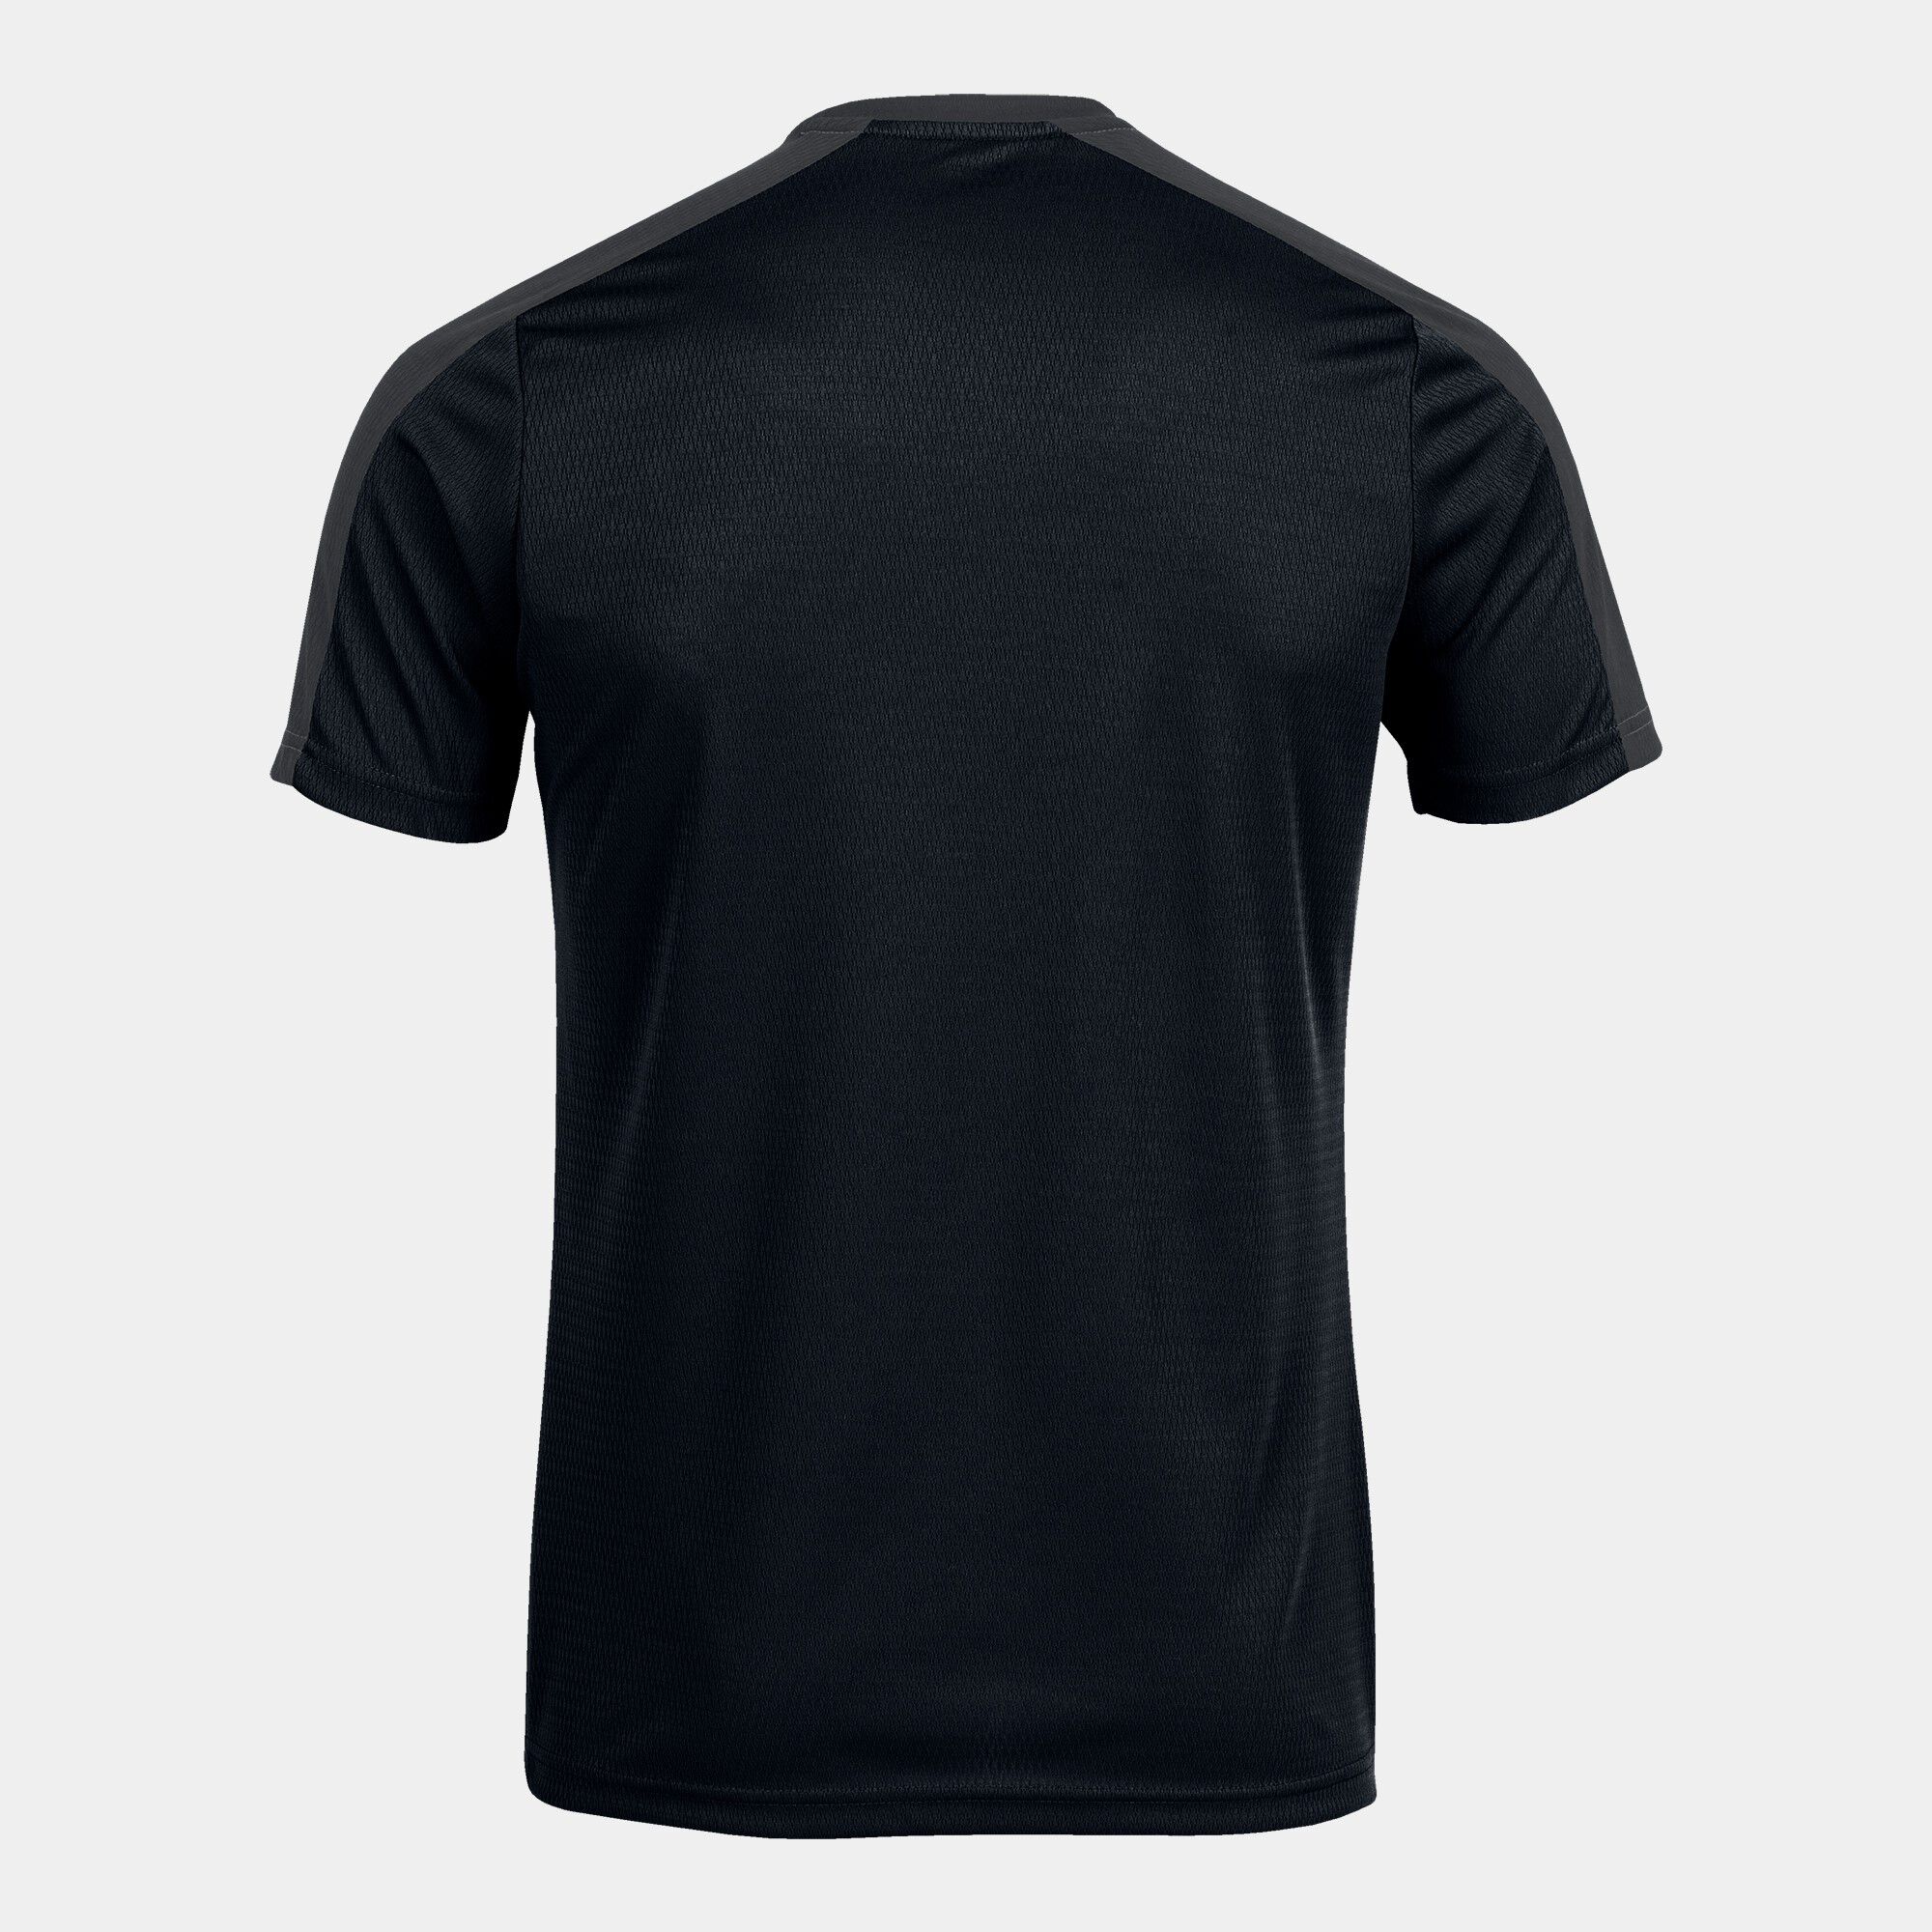 Shirt short sleeve man Eco Championship black dark gray